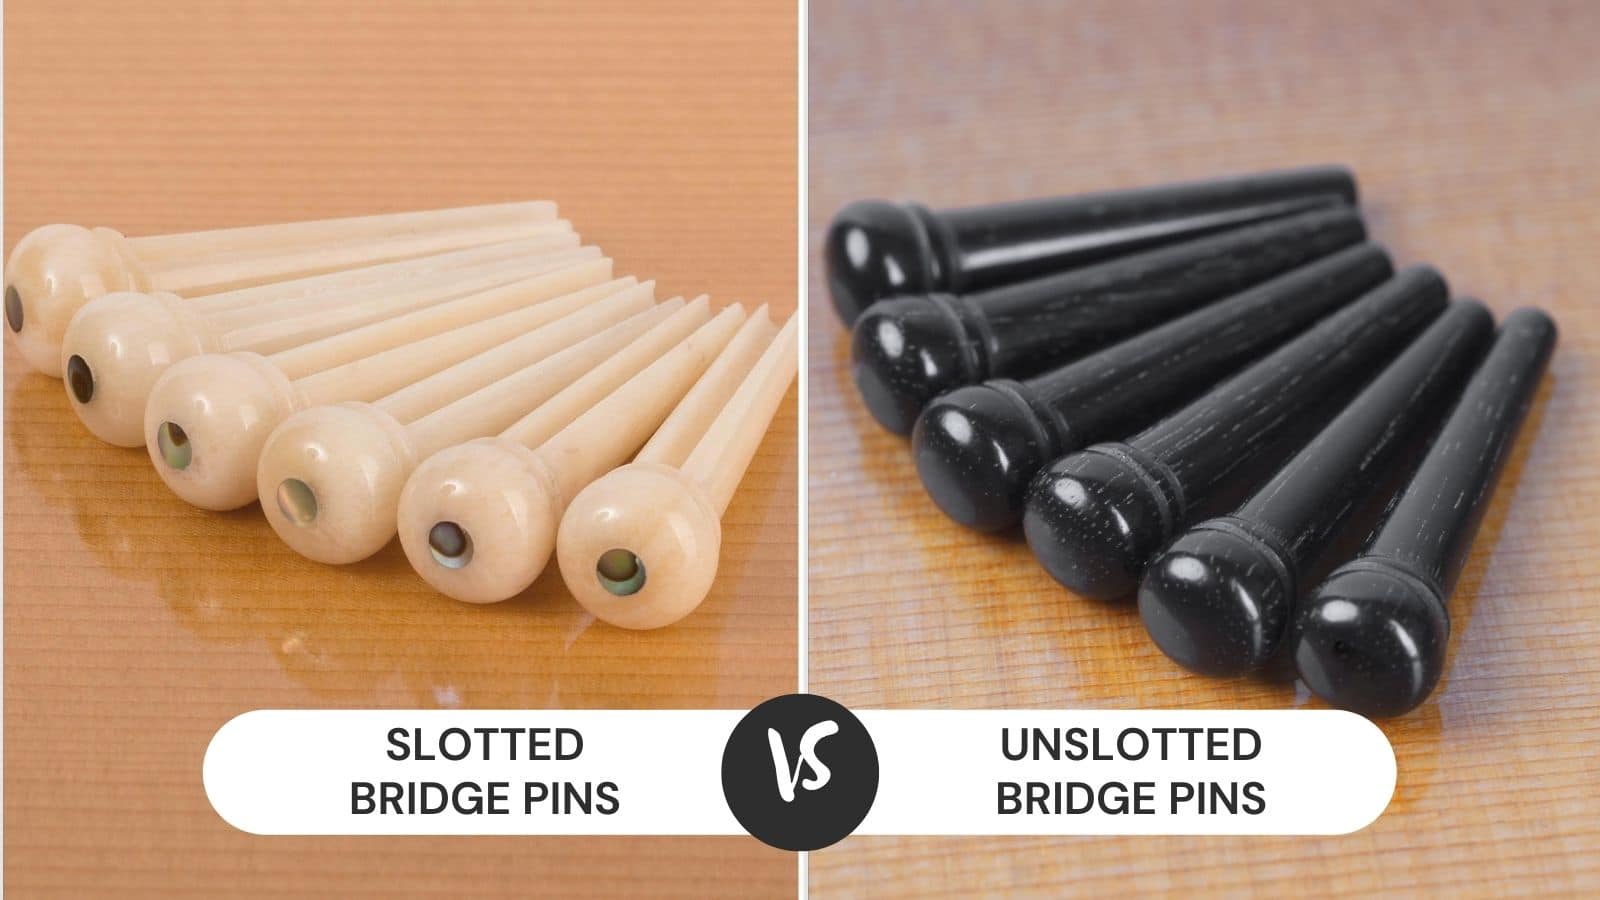 Slotted Bridge Pins vs Unslotted